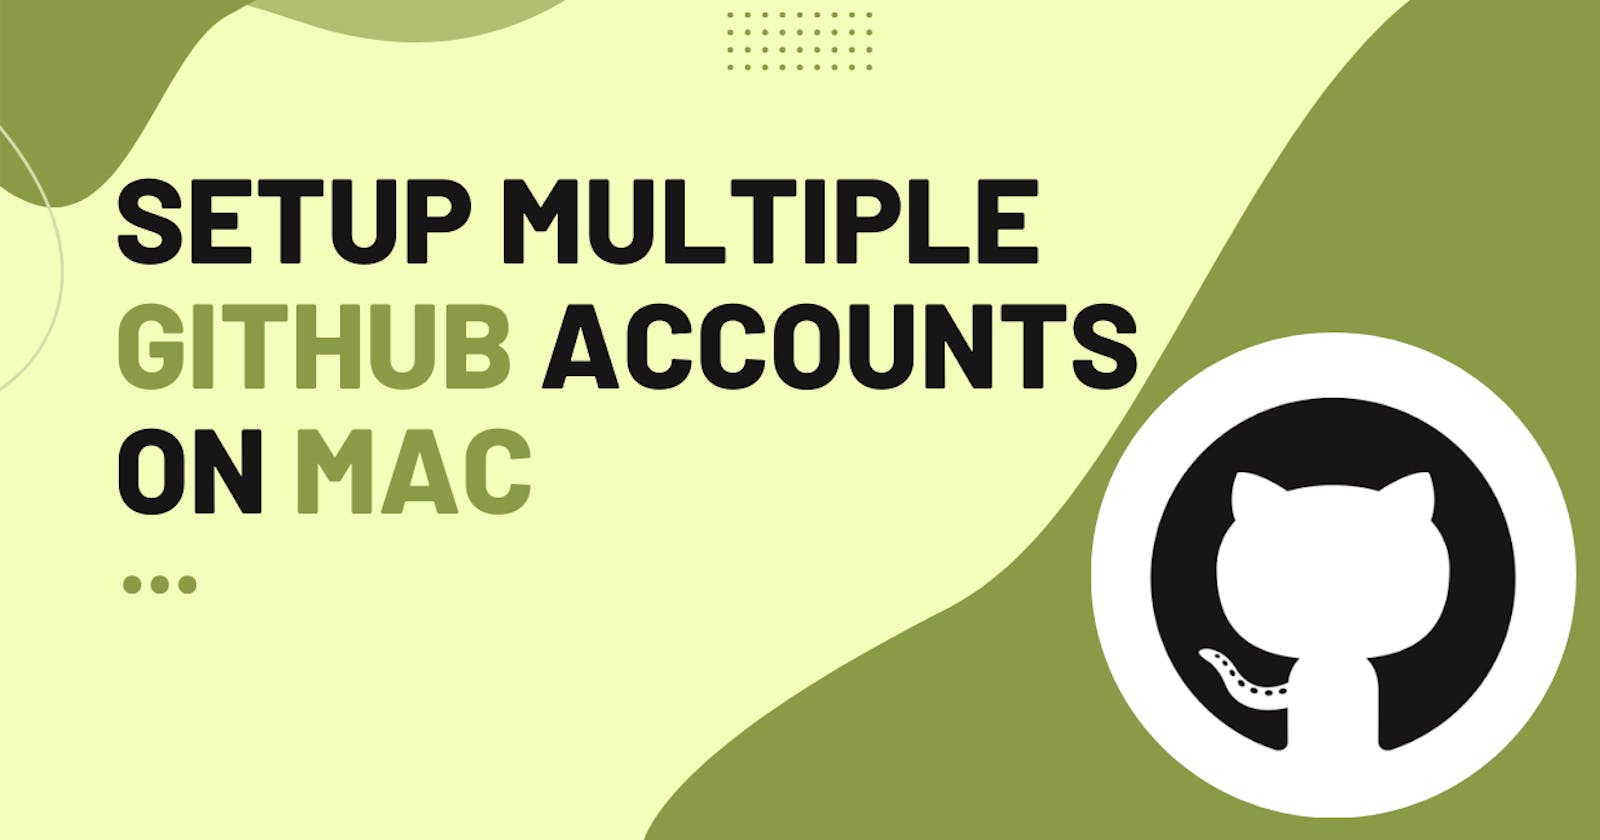 Setup multiple Github accounts on mac. 💻